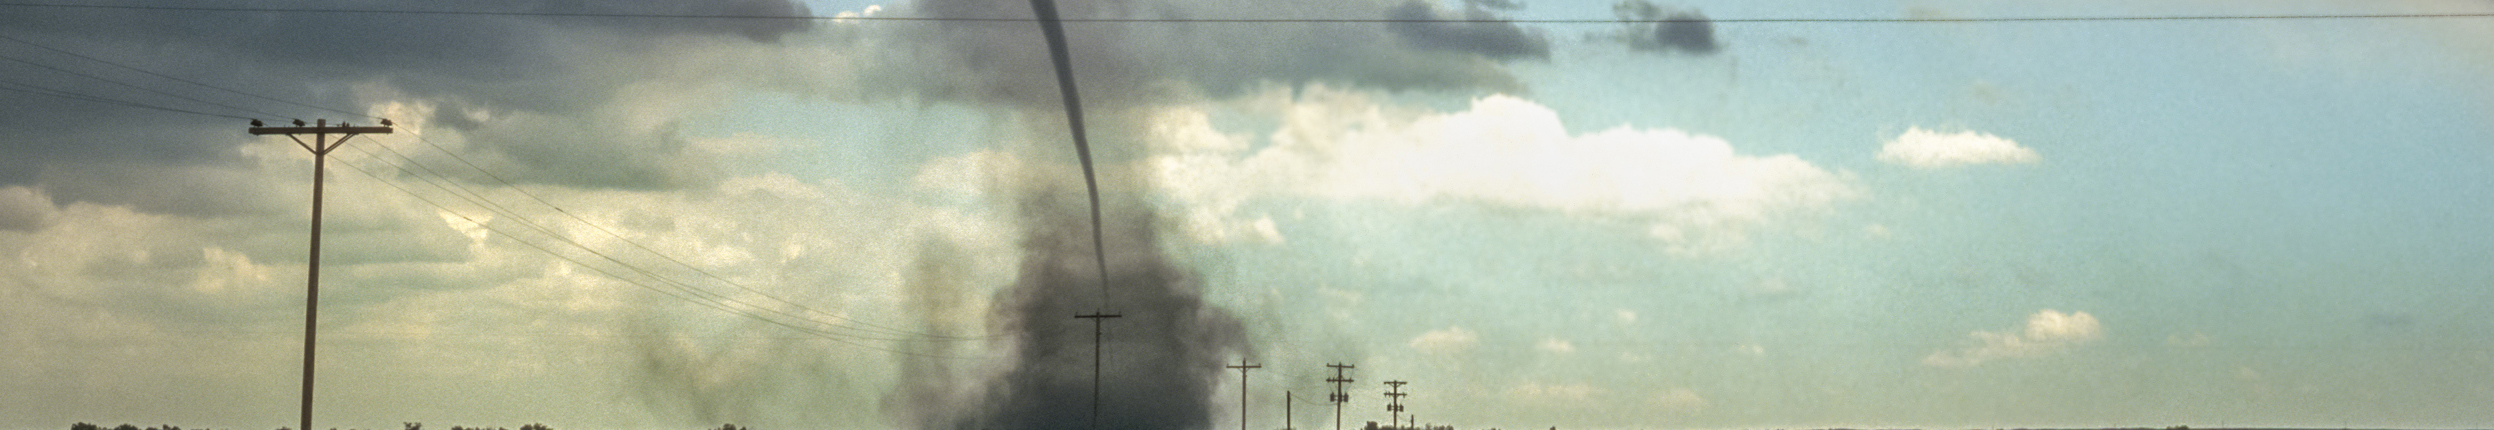 a tornado or wind event